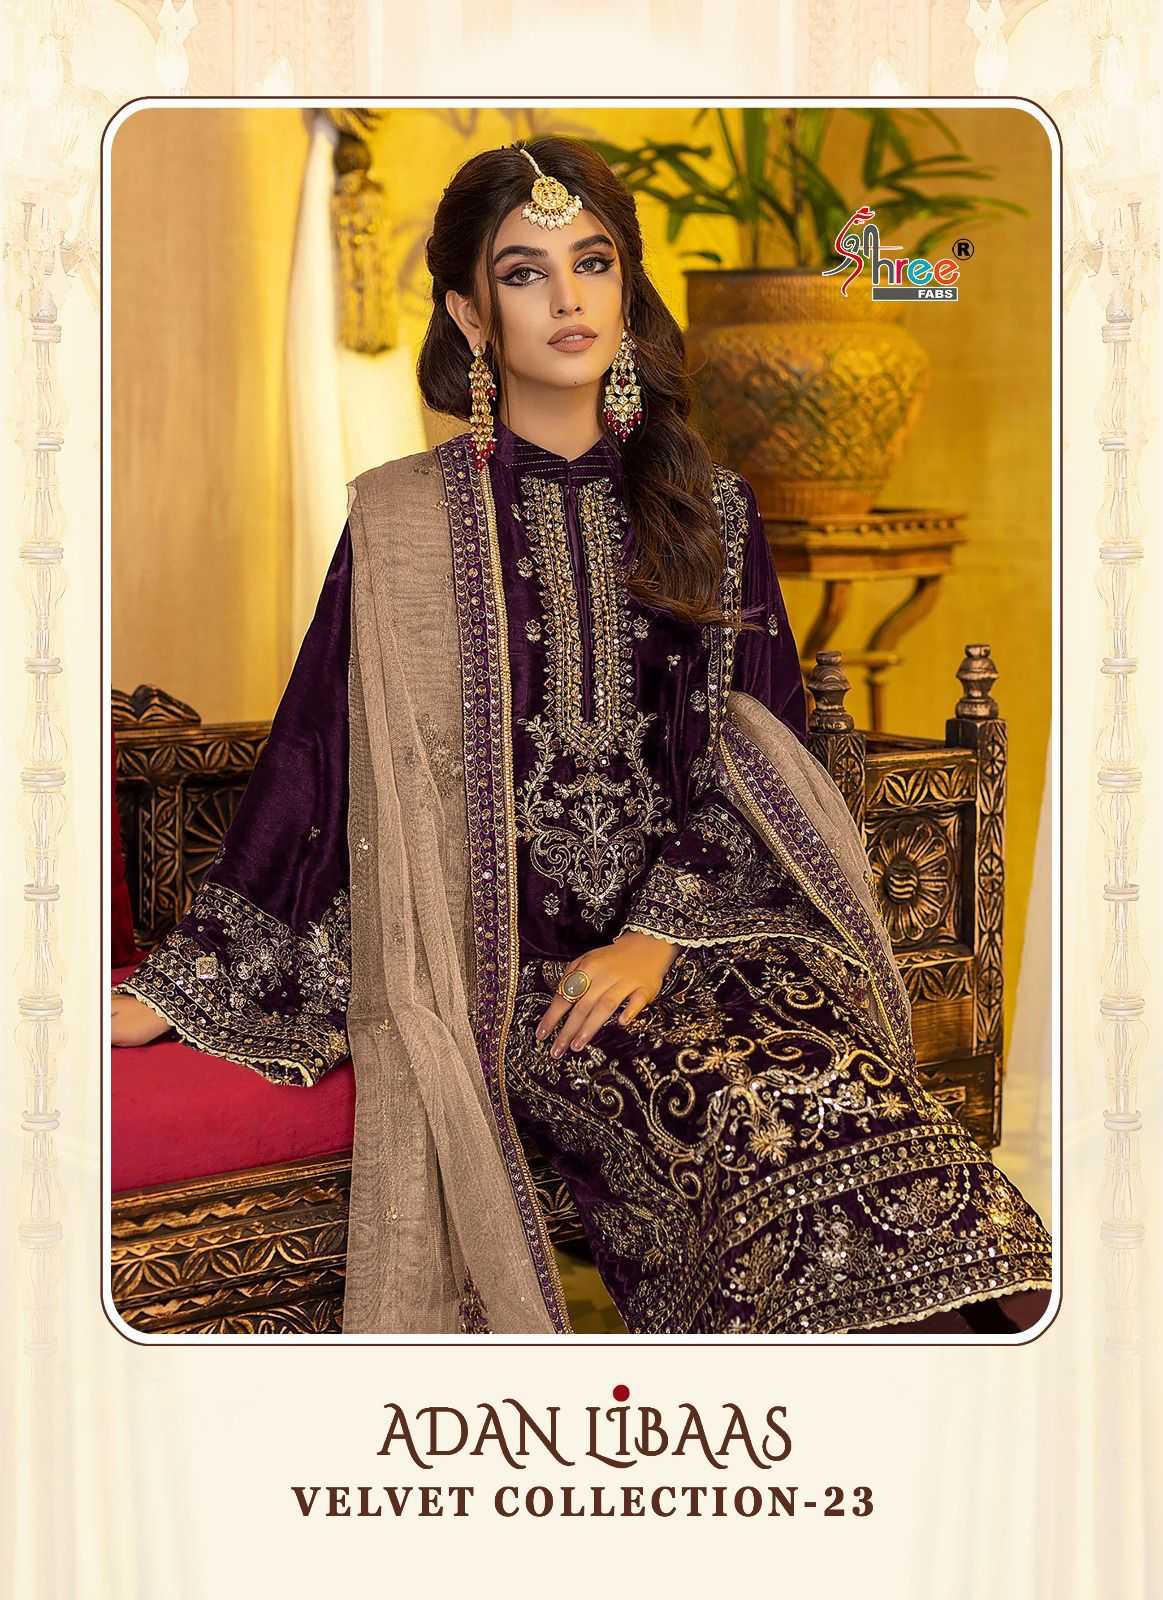  adan libaas velevt collection 23 by shree fab designer winter wear unstitch salwar kameez 